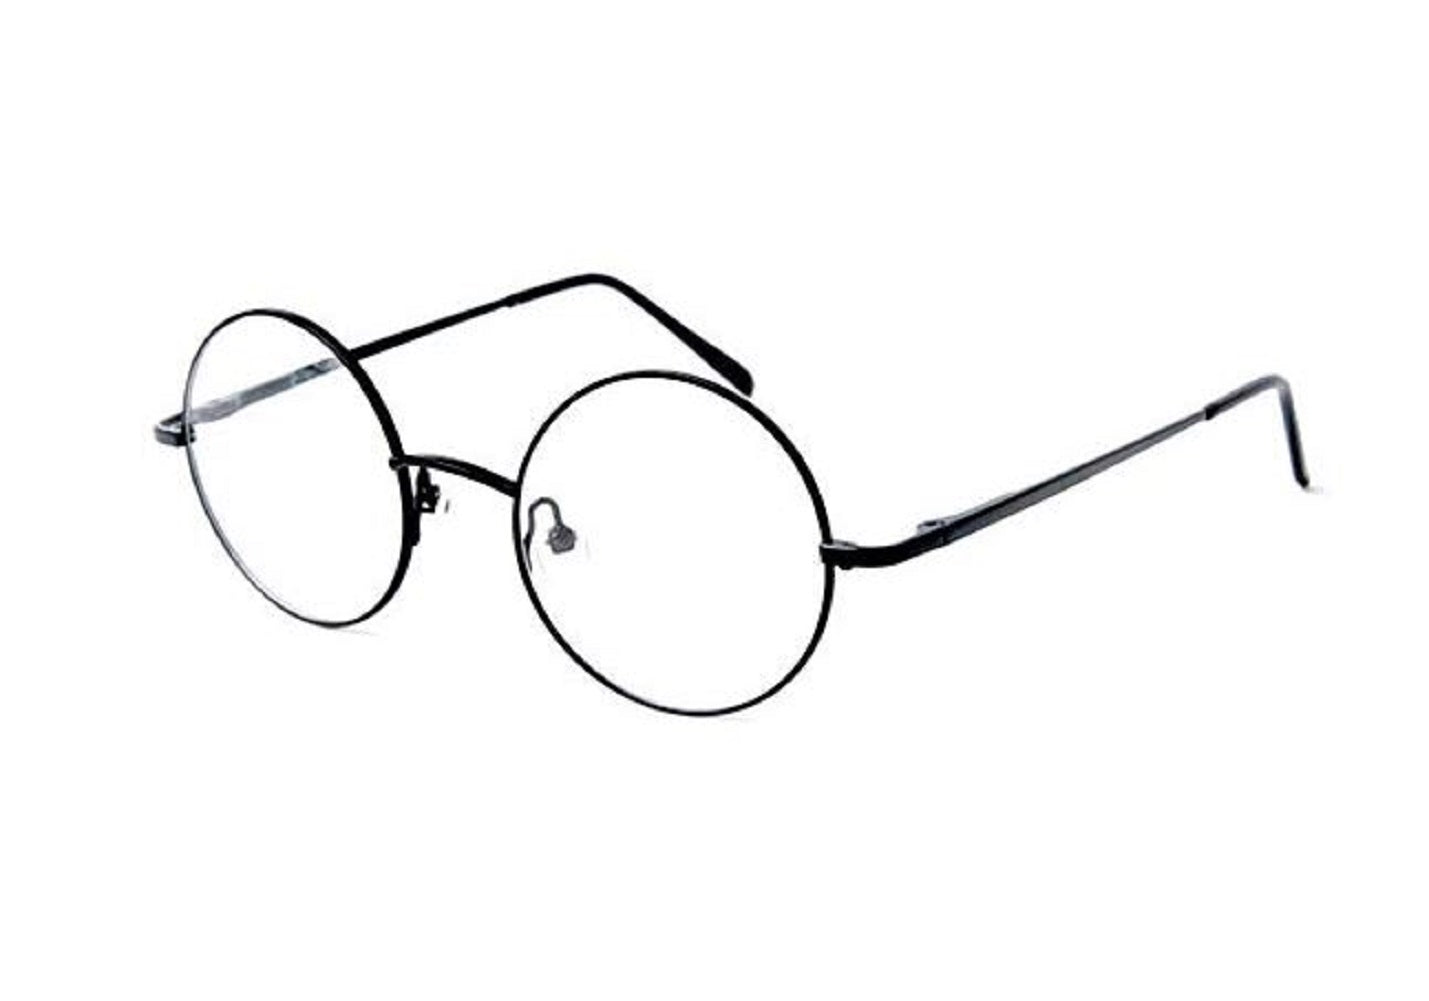 Harry Potter Glasses - Black - Costume Accessories - OSFM